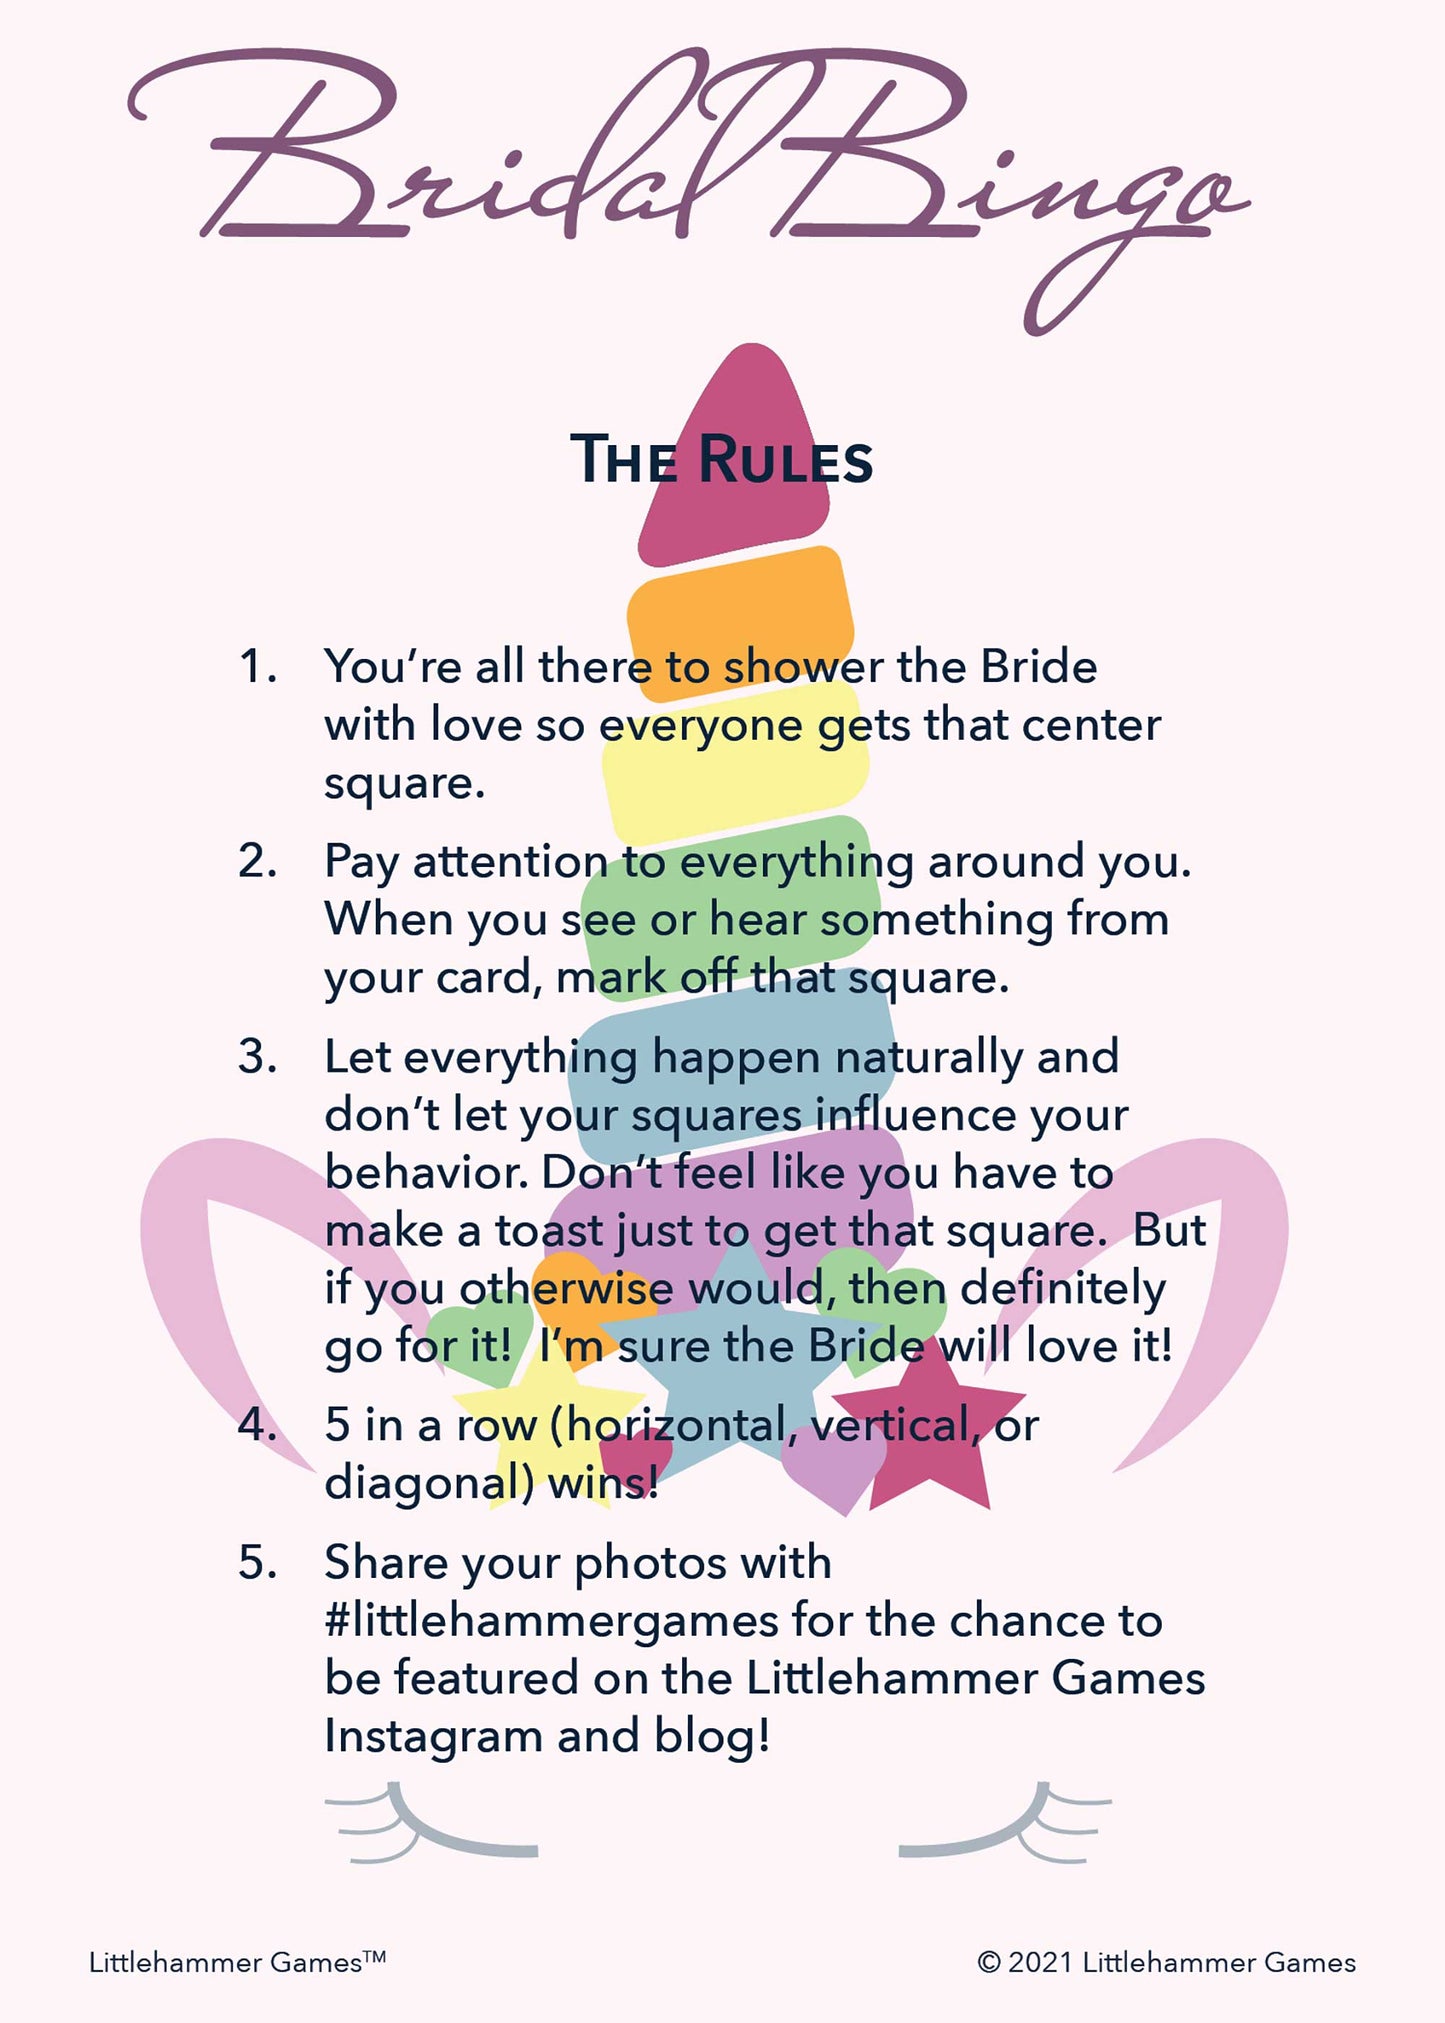 Bridal Bingo rules card on a unicorn background